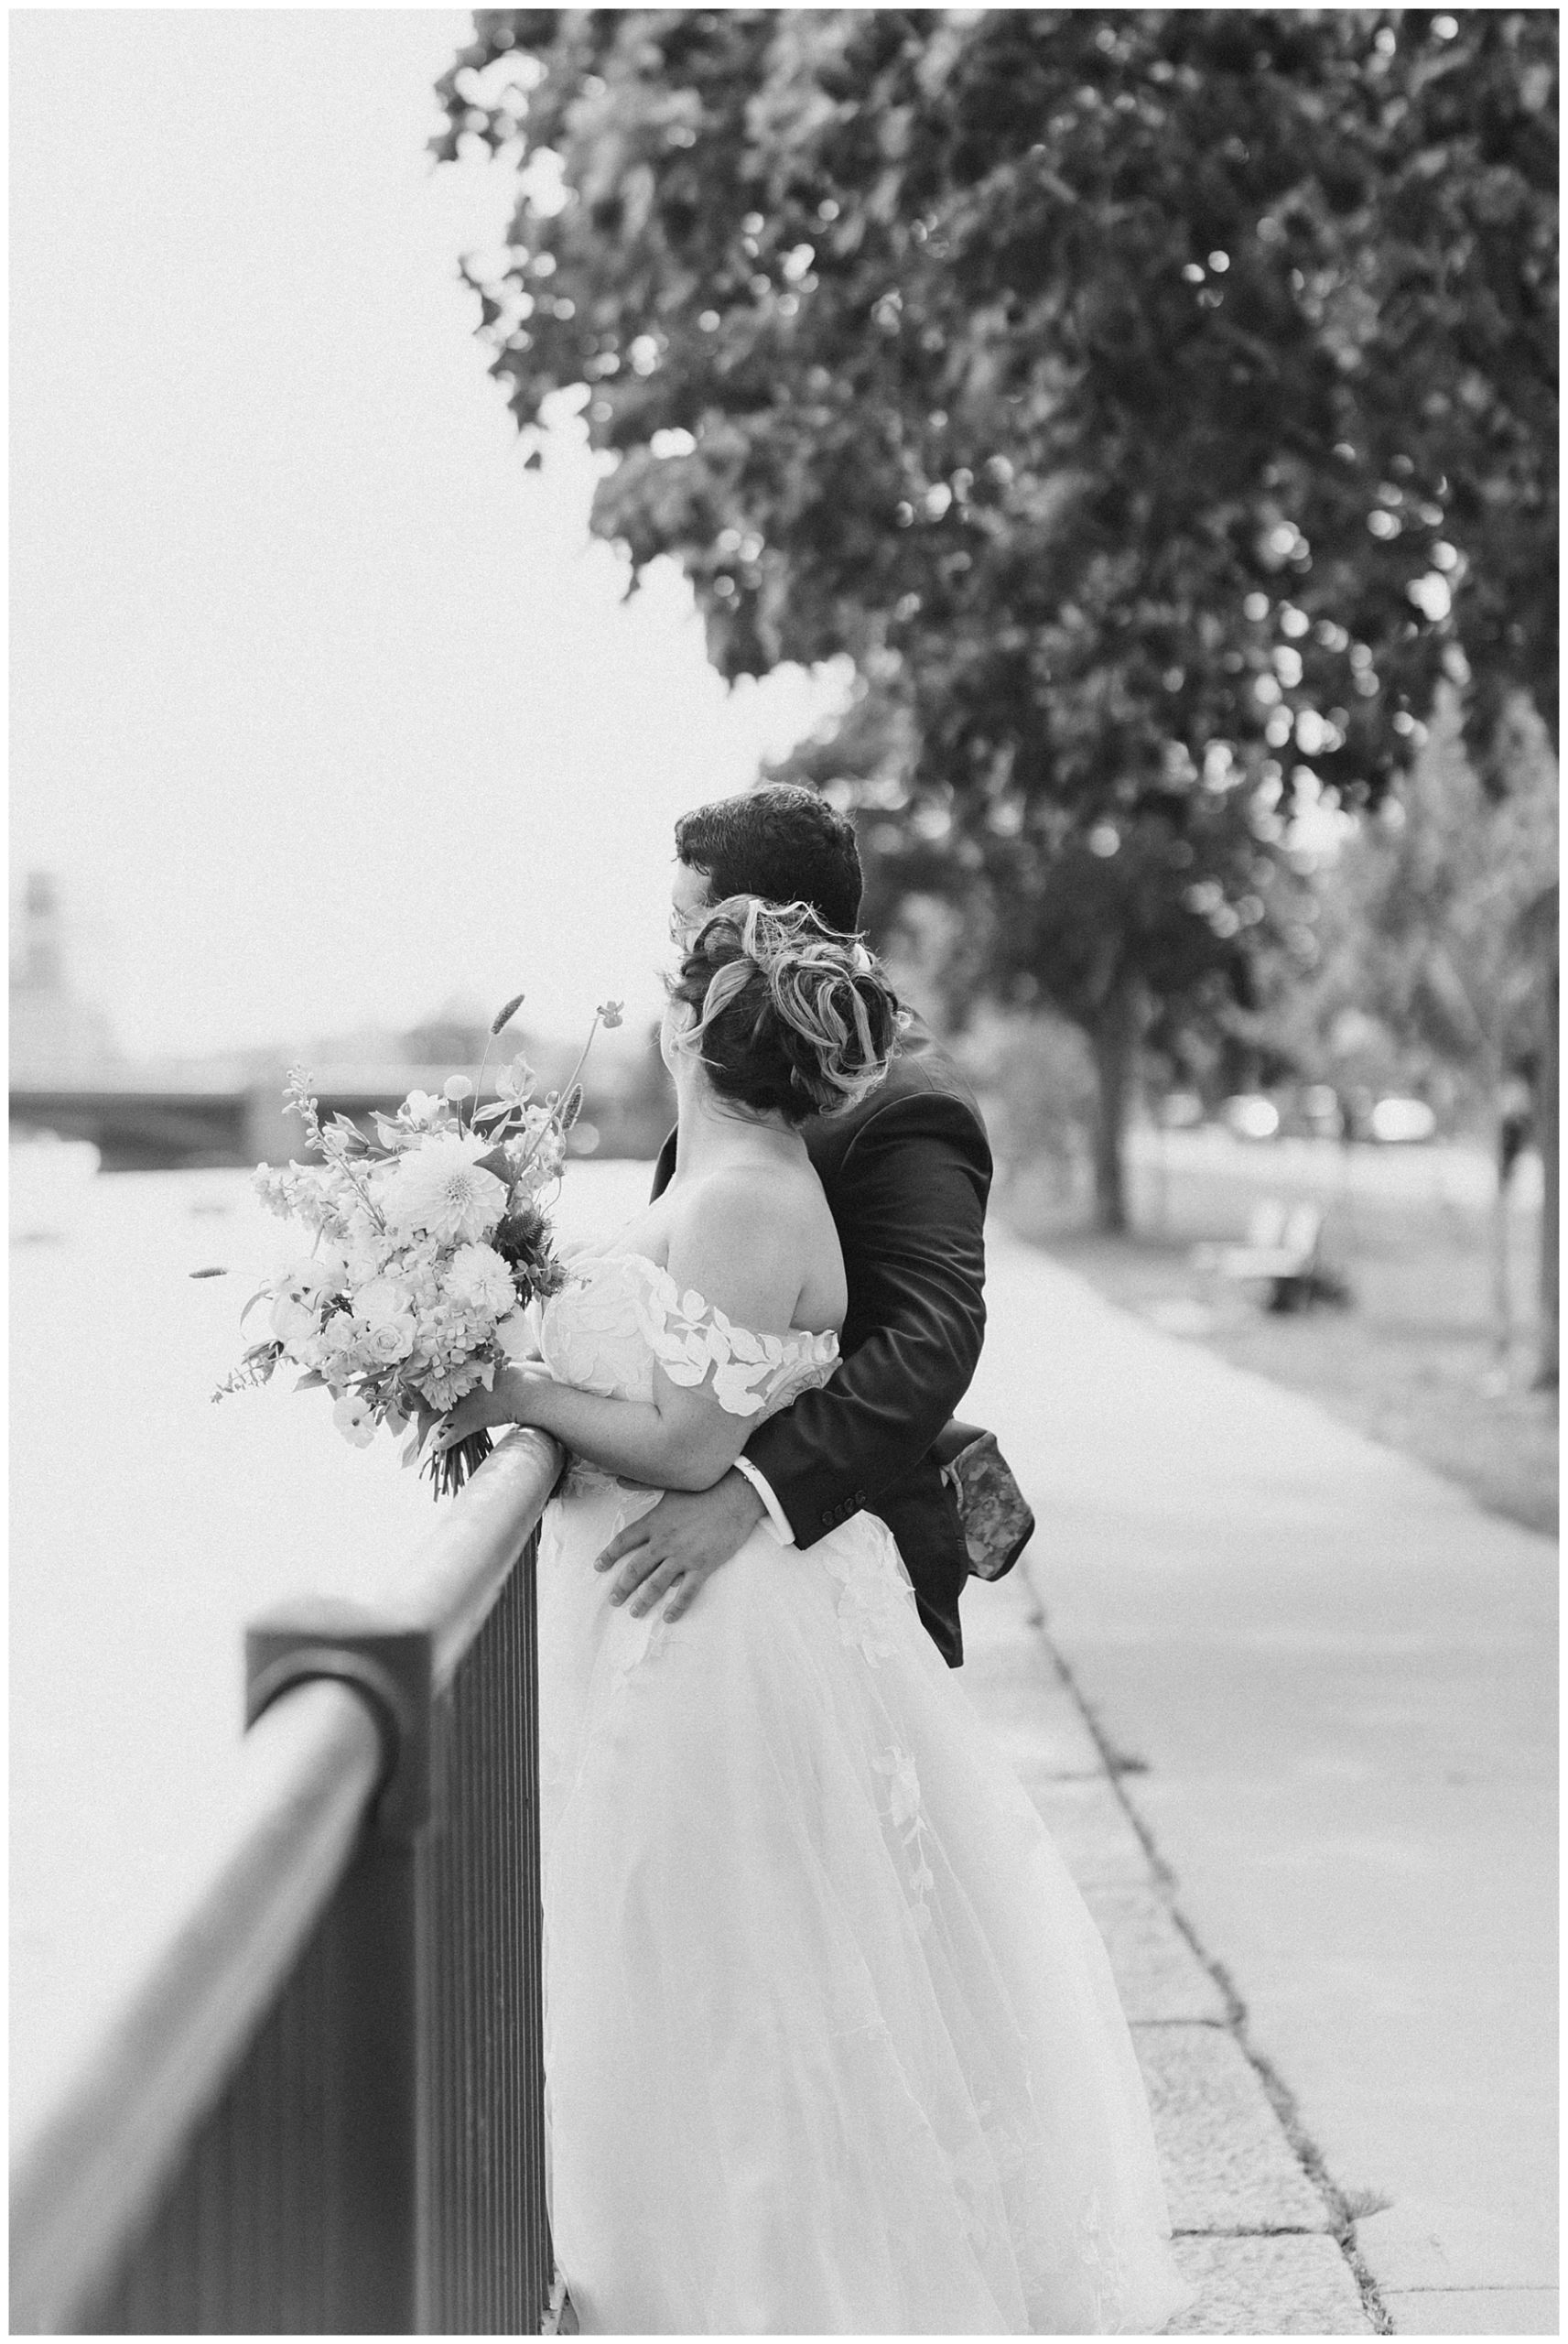 classic wedding portraits by Boston wedding photographer Stephanie Berenson